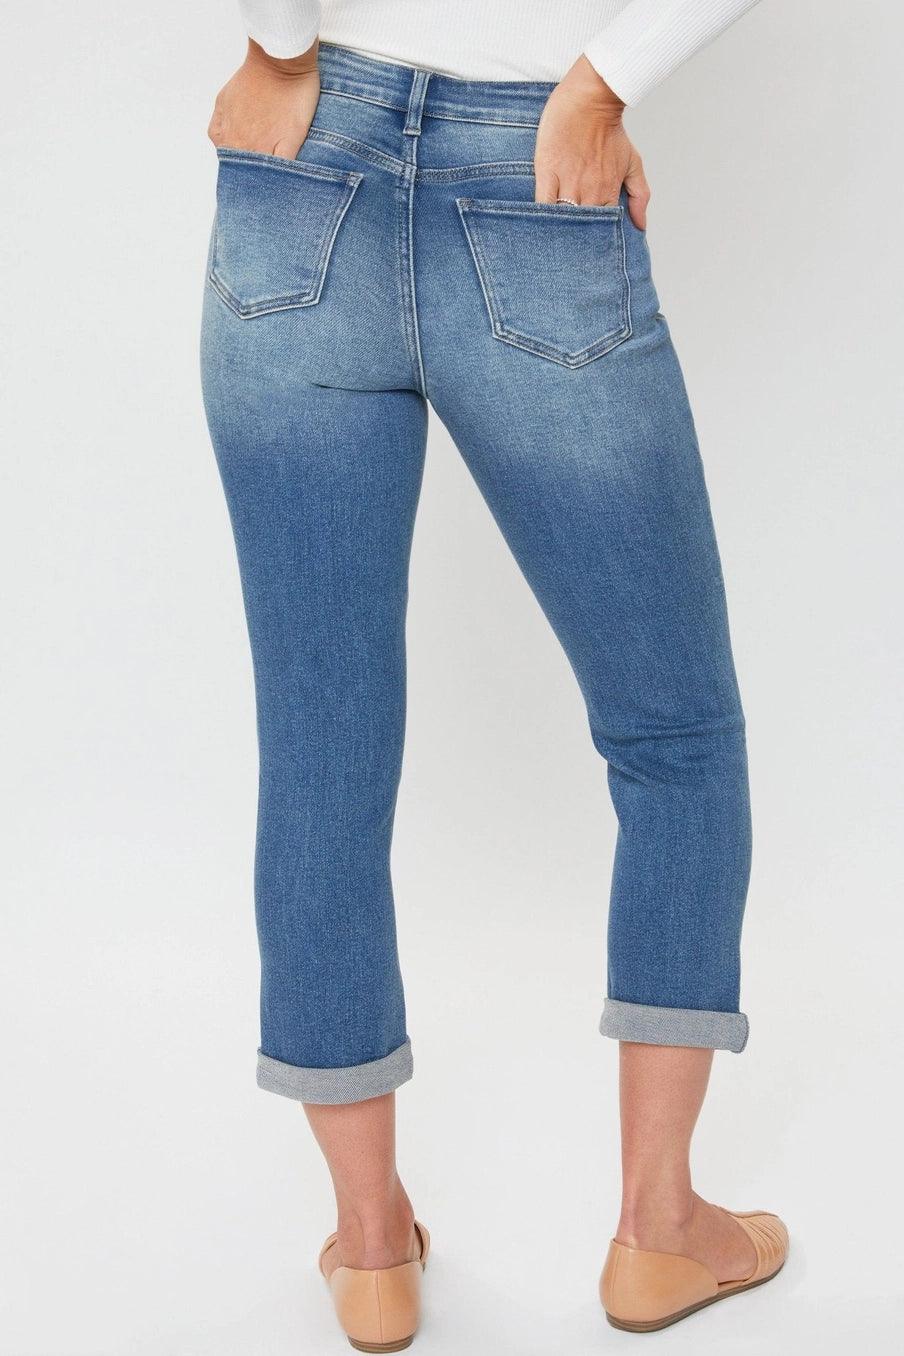 Missy Petite Vintage Slim Straight Jean - The Salty Mare